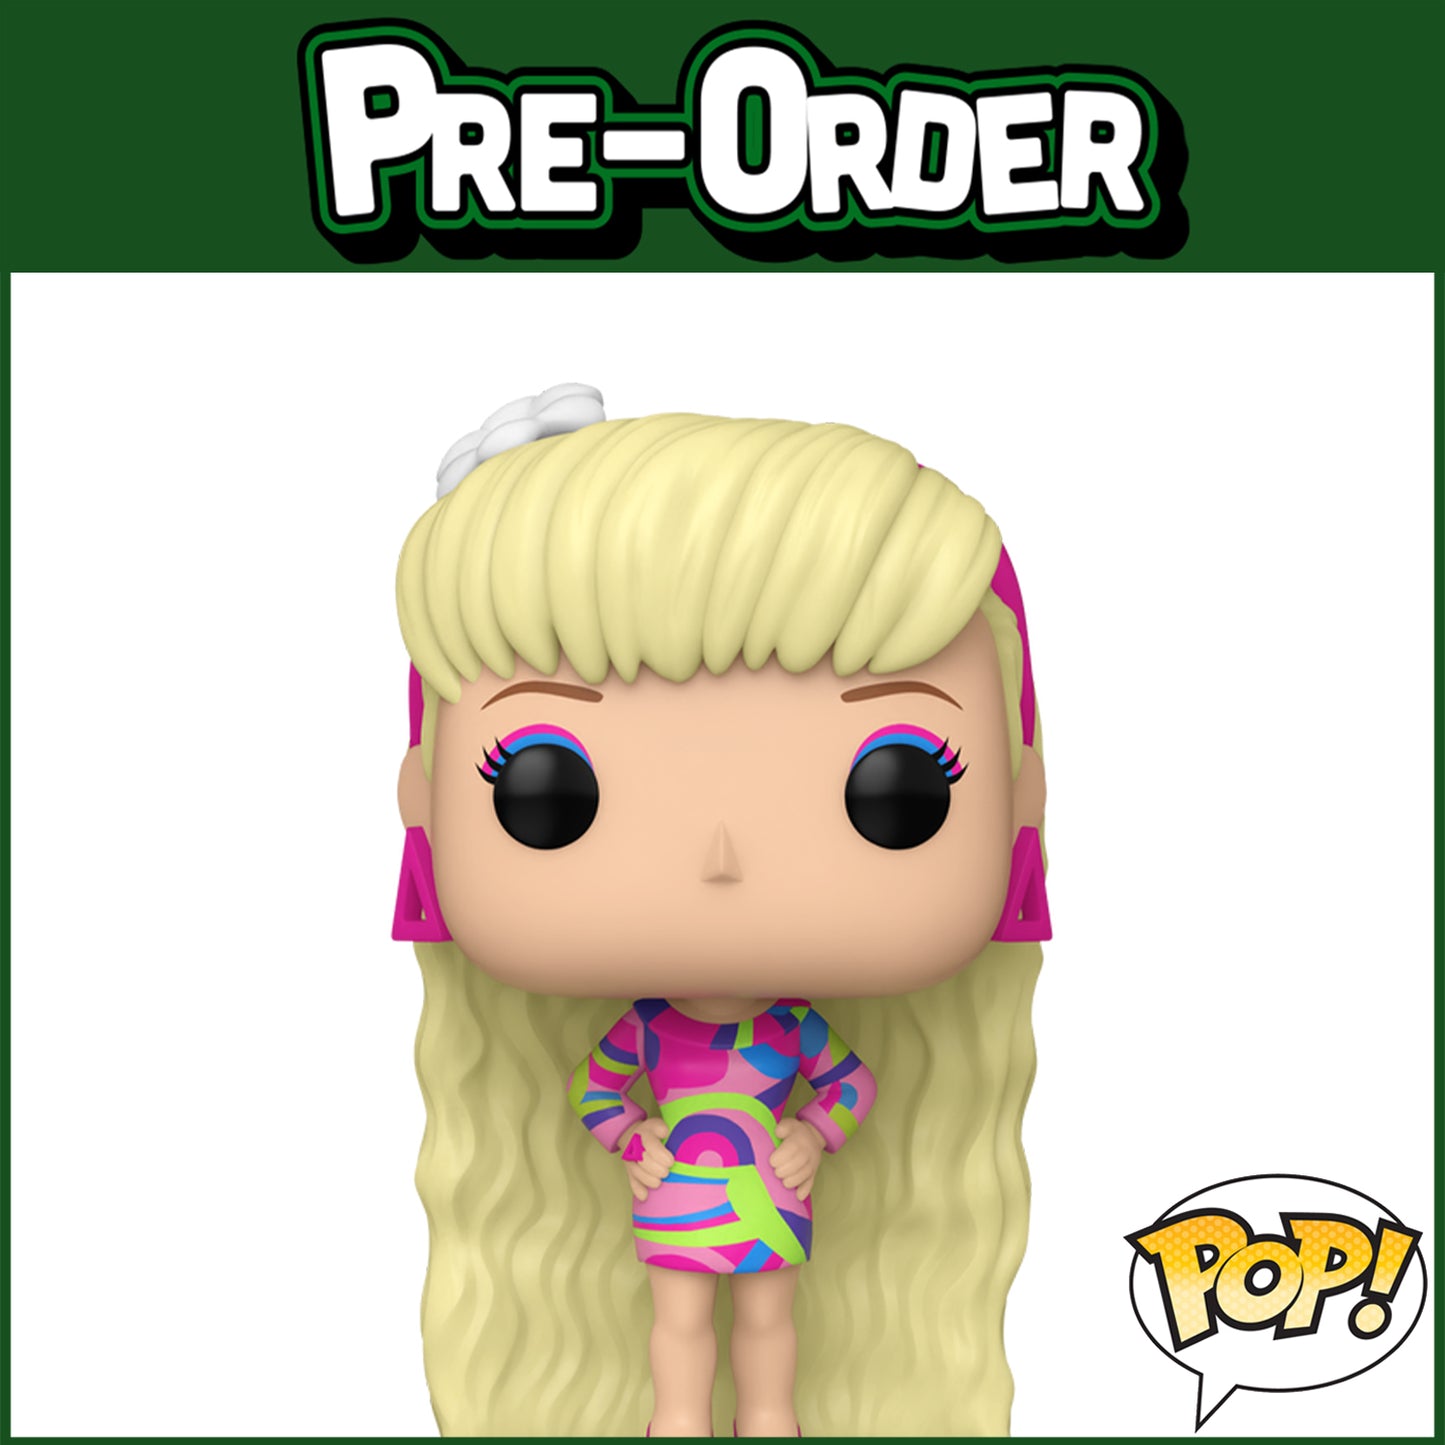 (PRE-ORDER) Funko POP! Retro Toys: Barbie - Totally Hair Barbie #123